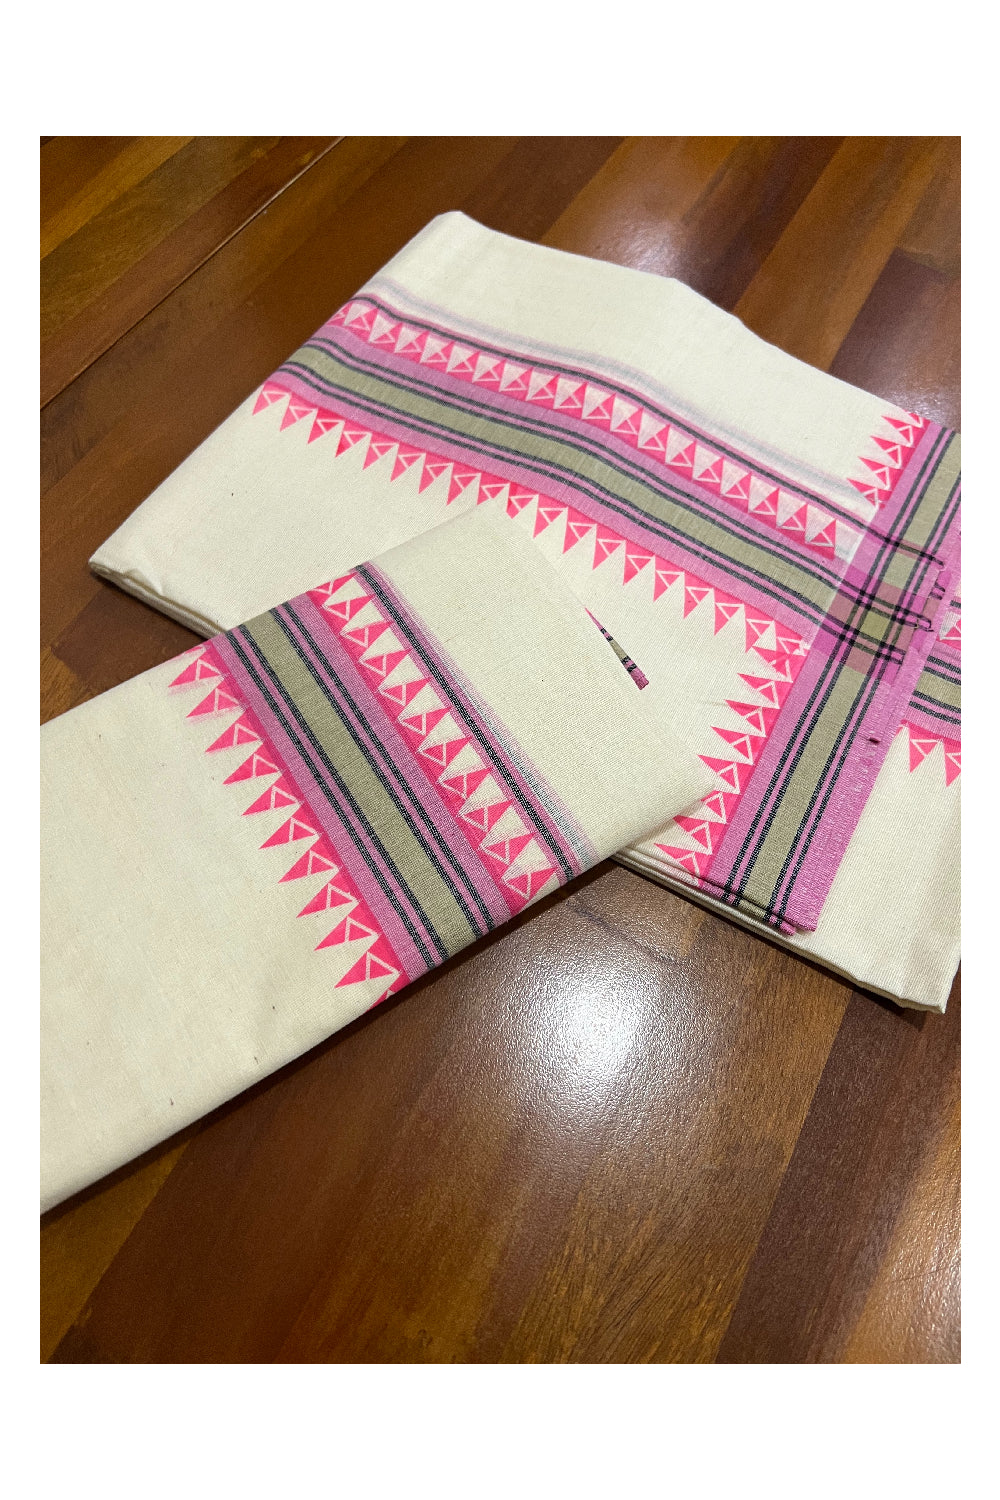 Kerala Cotton Mulloth Mundum Neriyathum Single (Set Mundu) with Pink Temple Block Prints on Green and Pink Border (Extra Soft Cotton)